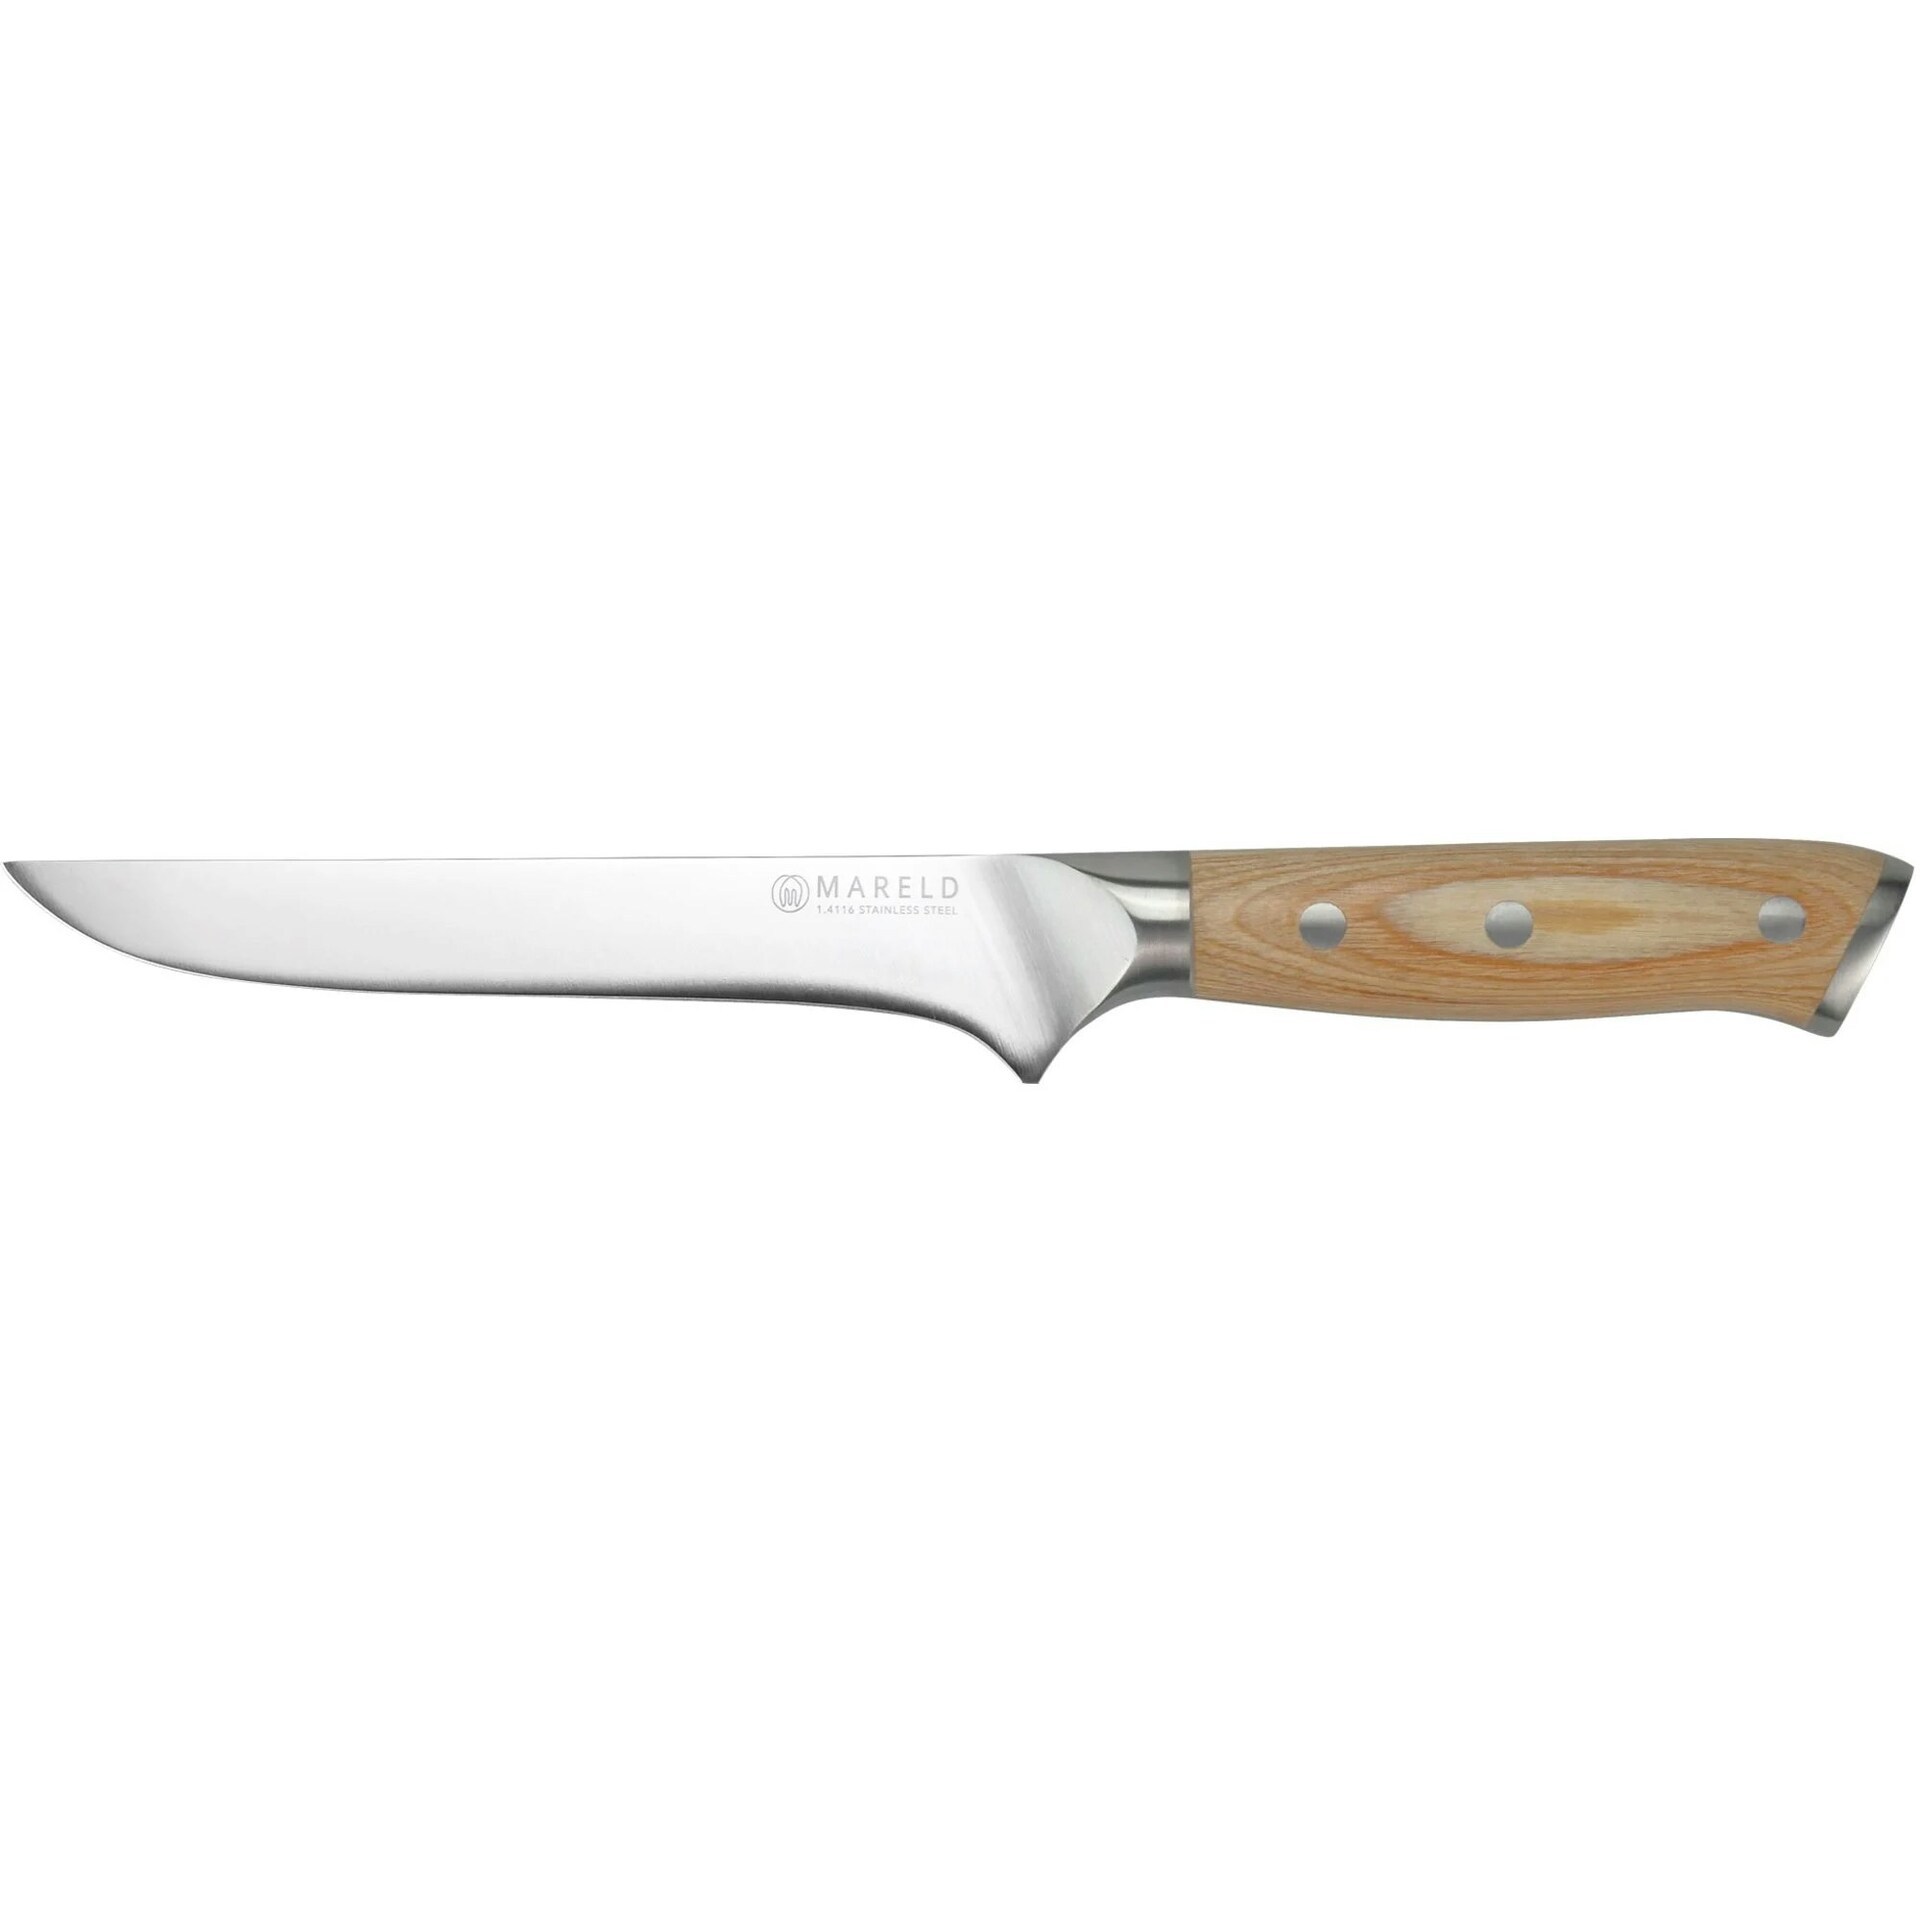 https://royaldesign.com/image/2/mareld-mareld-european-boning-knife-0